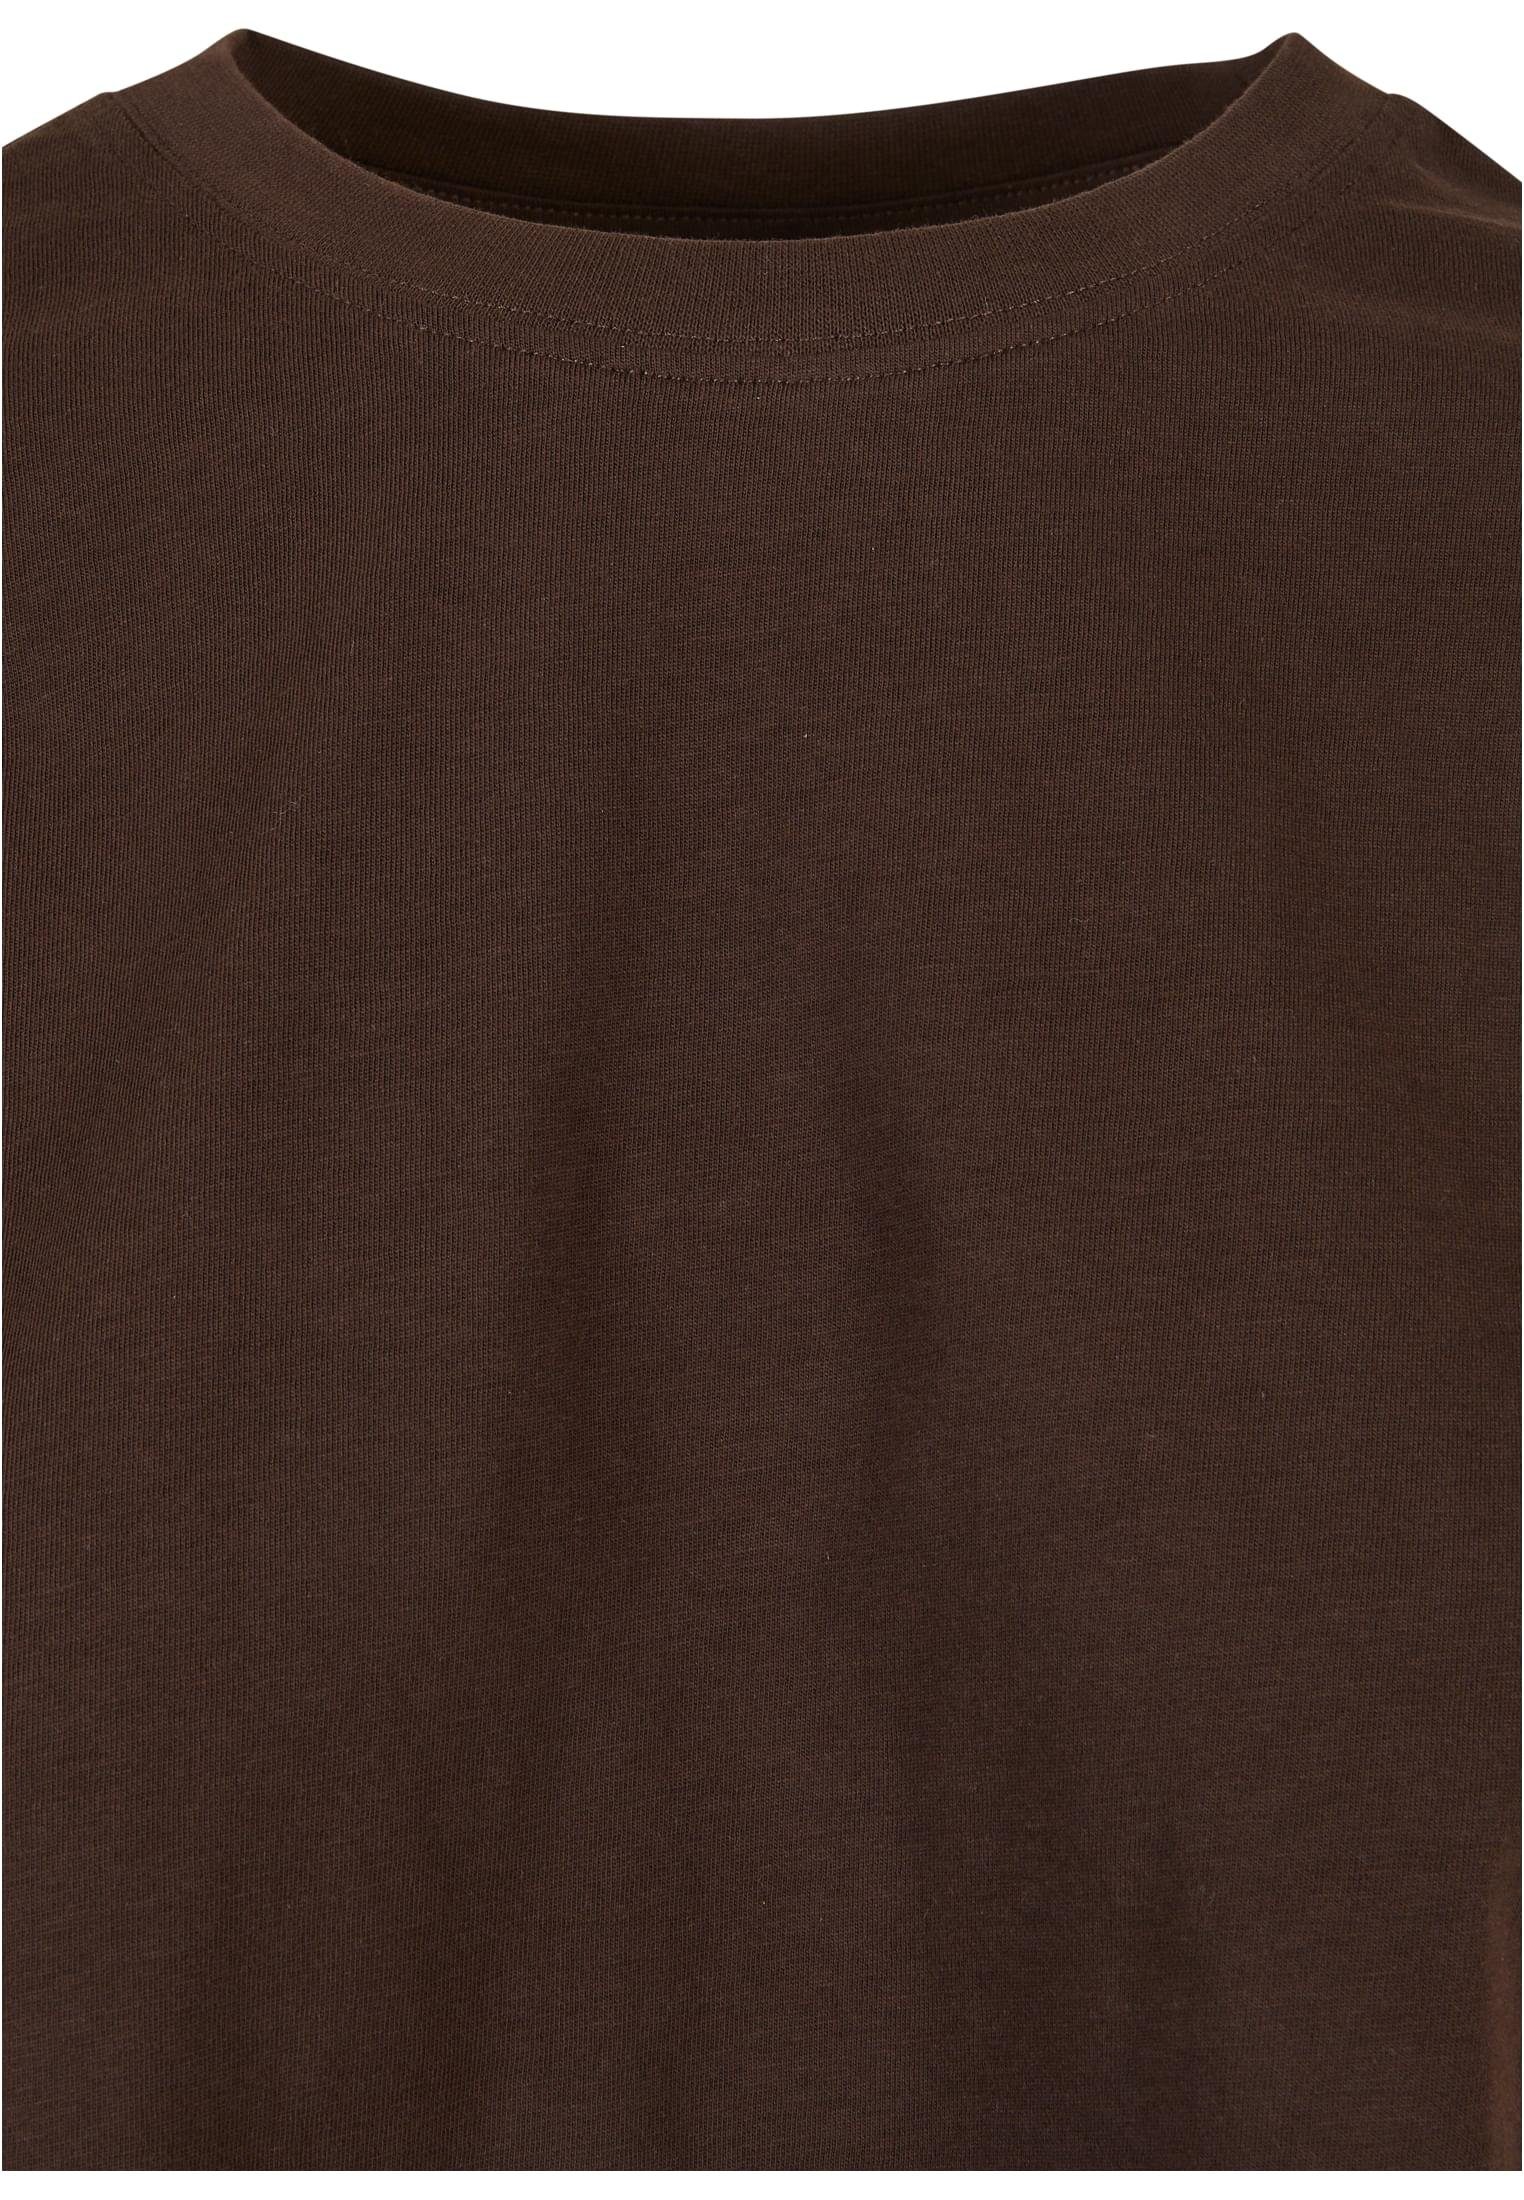 Damen T-Shirt Oversized (1-tlg) Tee Short brown CLASSICS URBAN Ladies